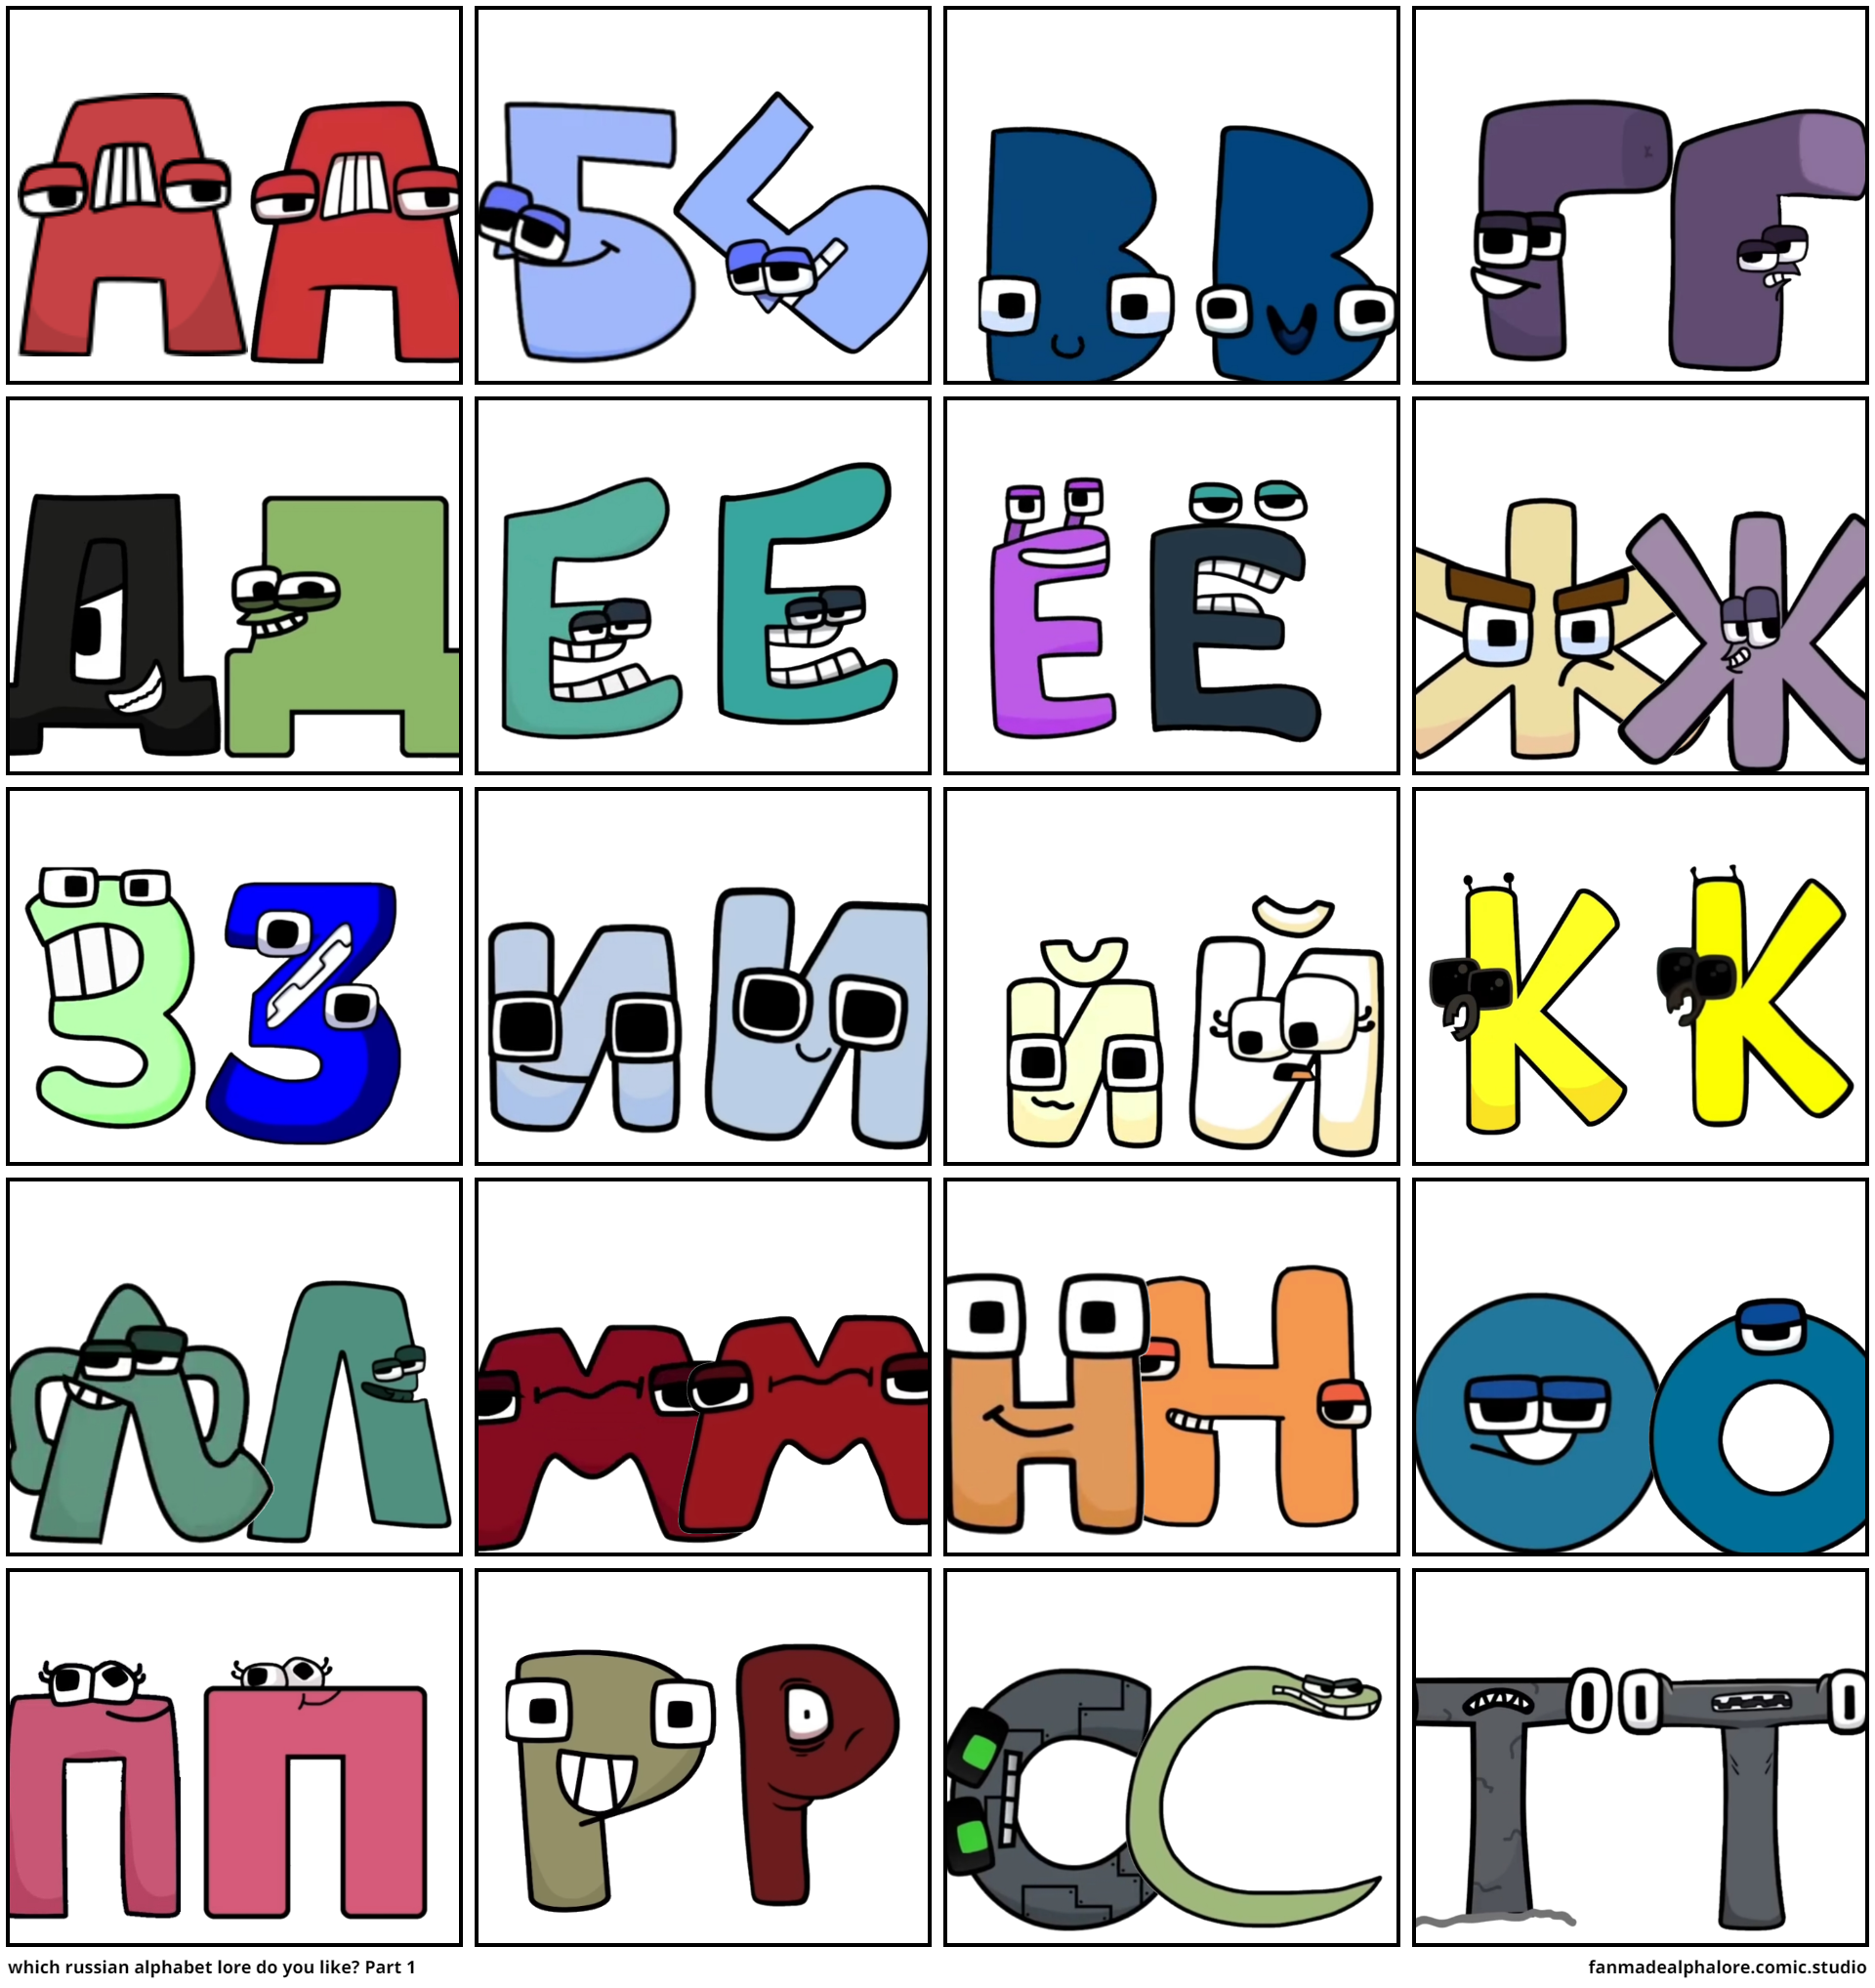 Russian Alphabet Lore 